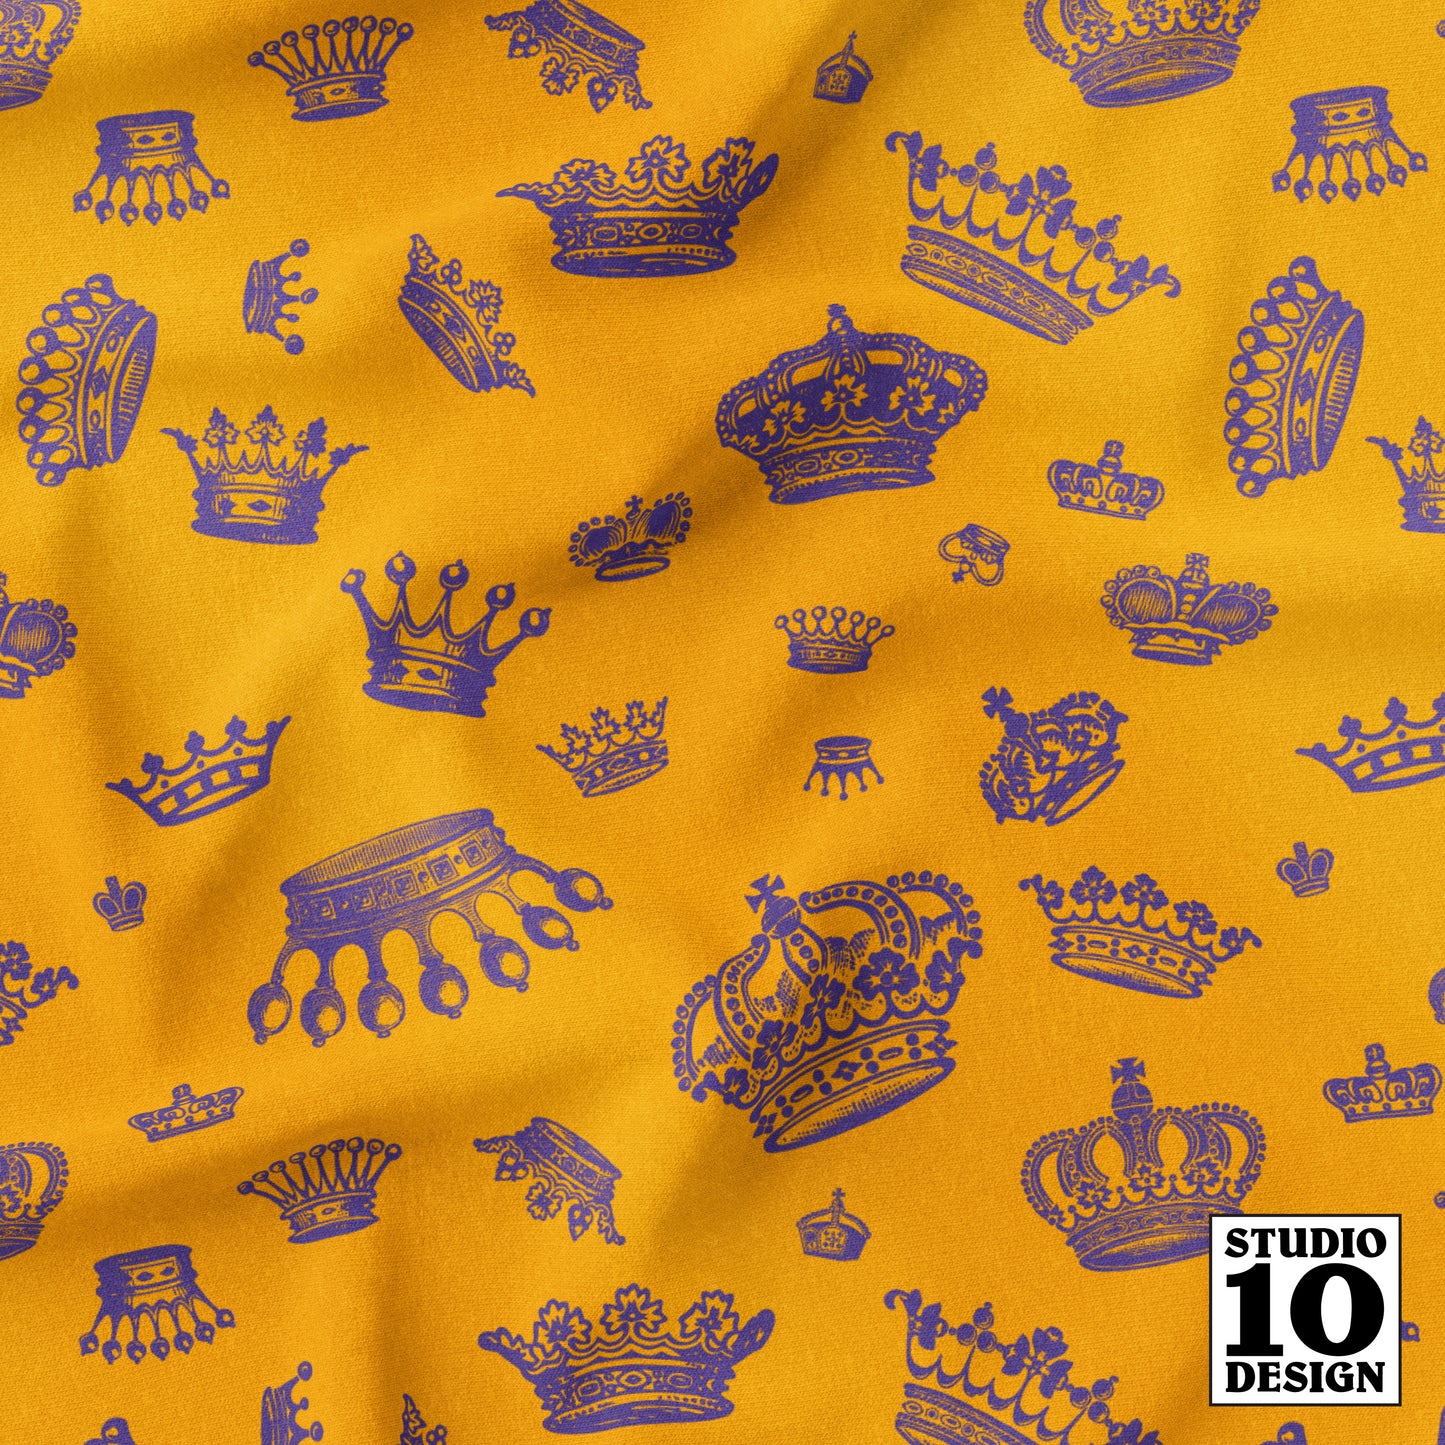 Royal Crowns Grape+Marigold Printed Fabric by Studio Ten Design